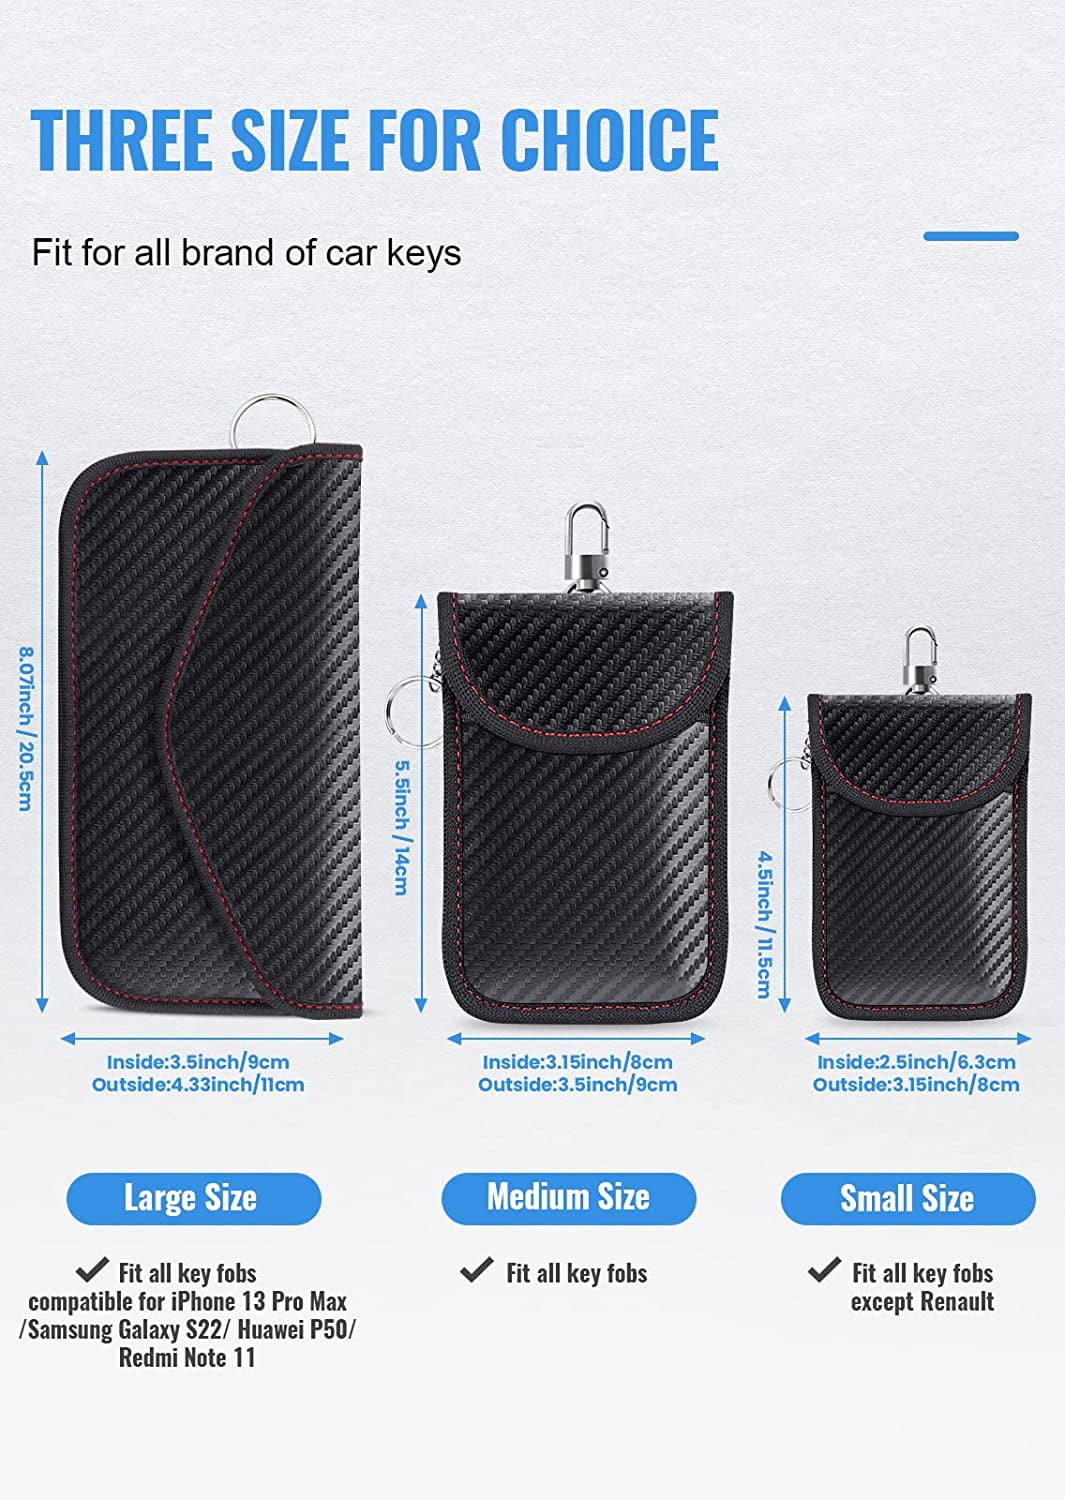 Faraday Bag for Key Fob (2 Pack), TICONN Faraday Cage Protector - Car RFID  Signal Blocking, Anti-Theft Pouch, Anti-Hacking Case Blocker (Carbon Fiber